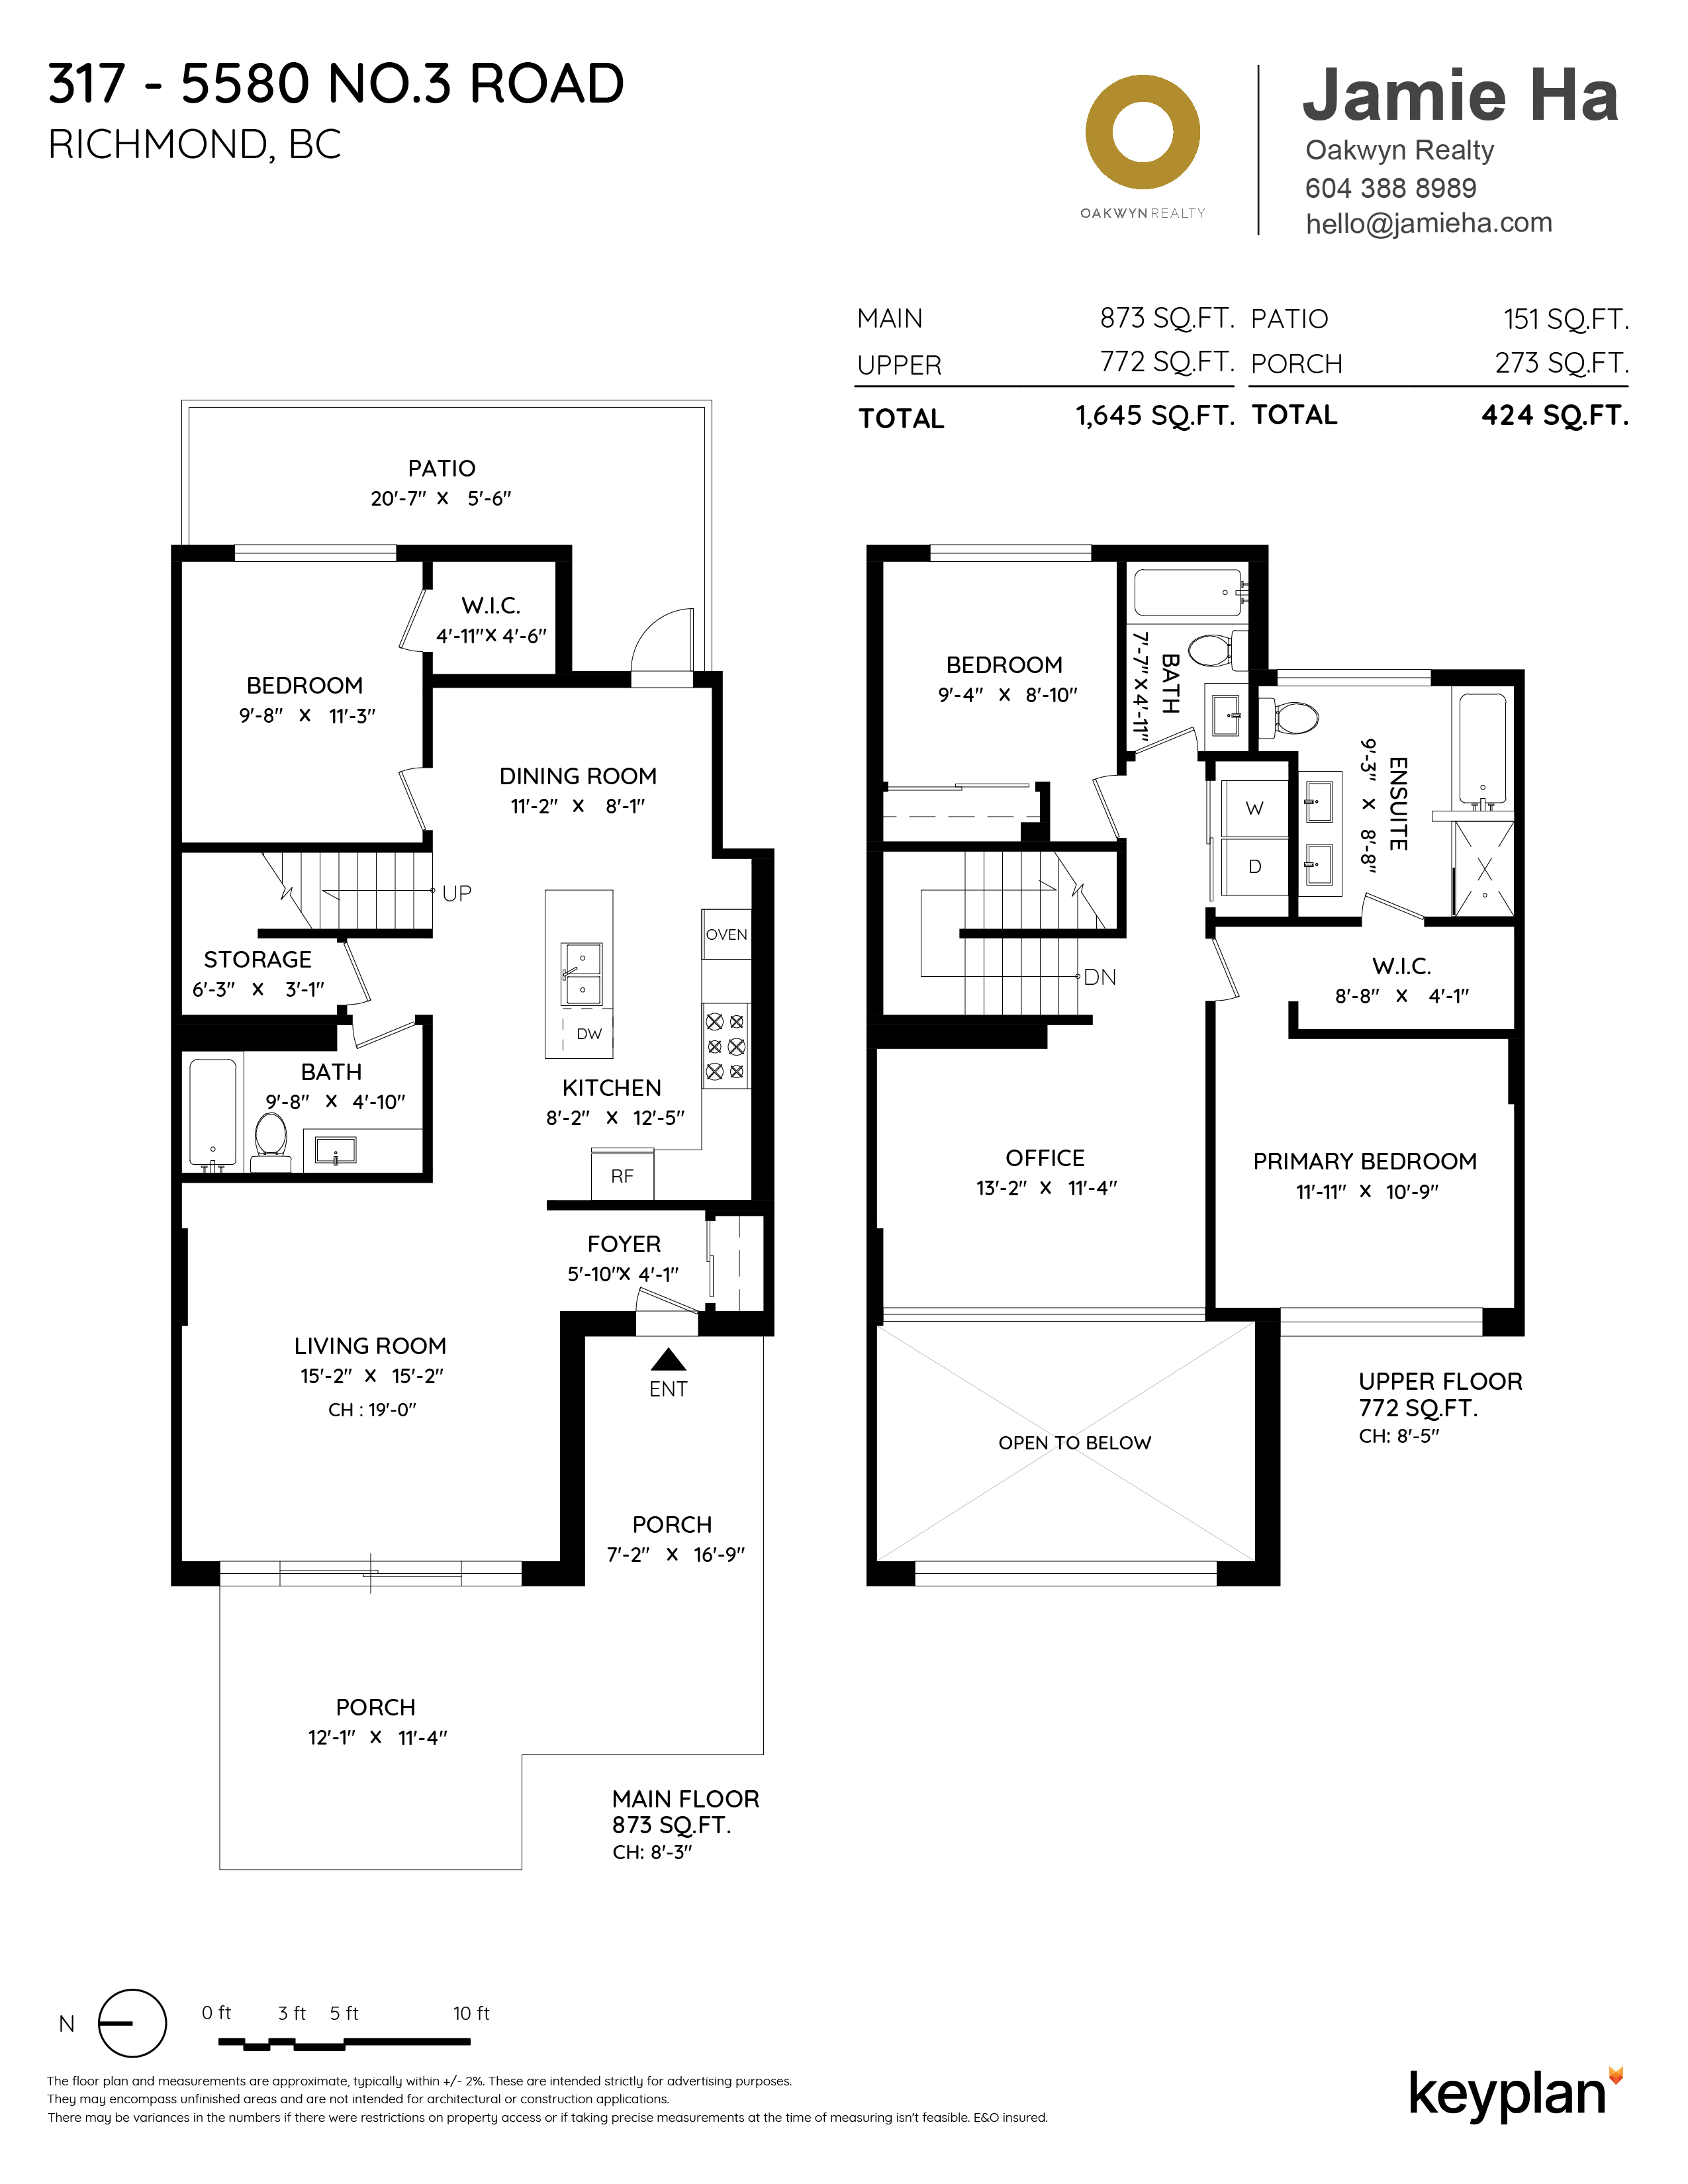 Jamie Ha - Unit 317 - 5580 No. 3 Road, Richmond, BC, V6X 0R8 Canada | Floor Plan 1